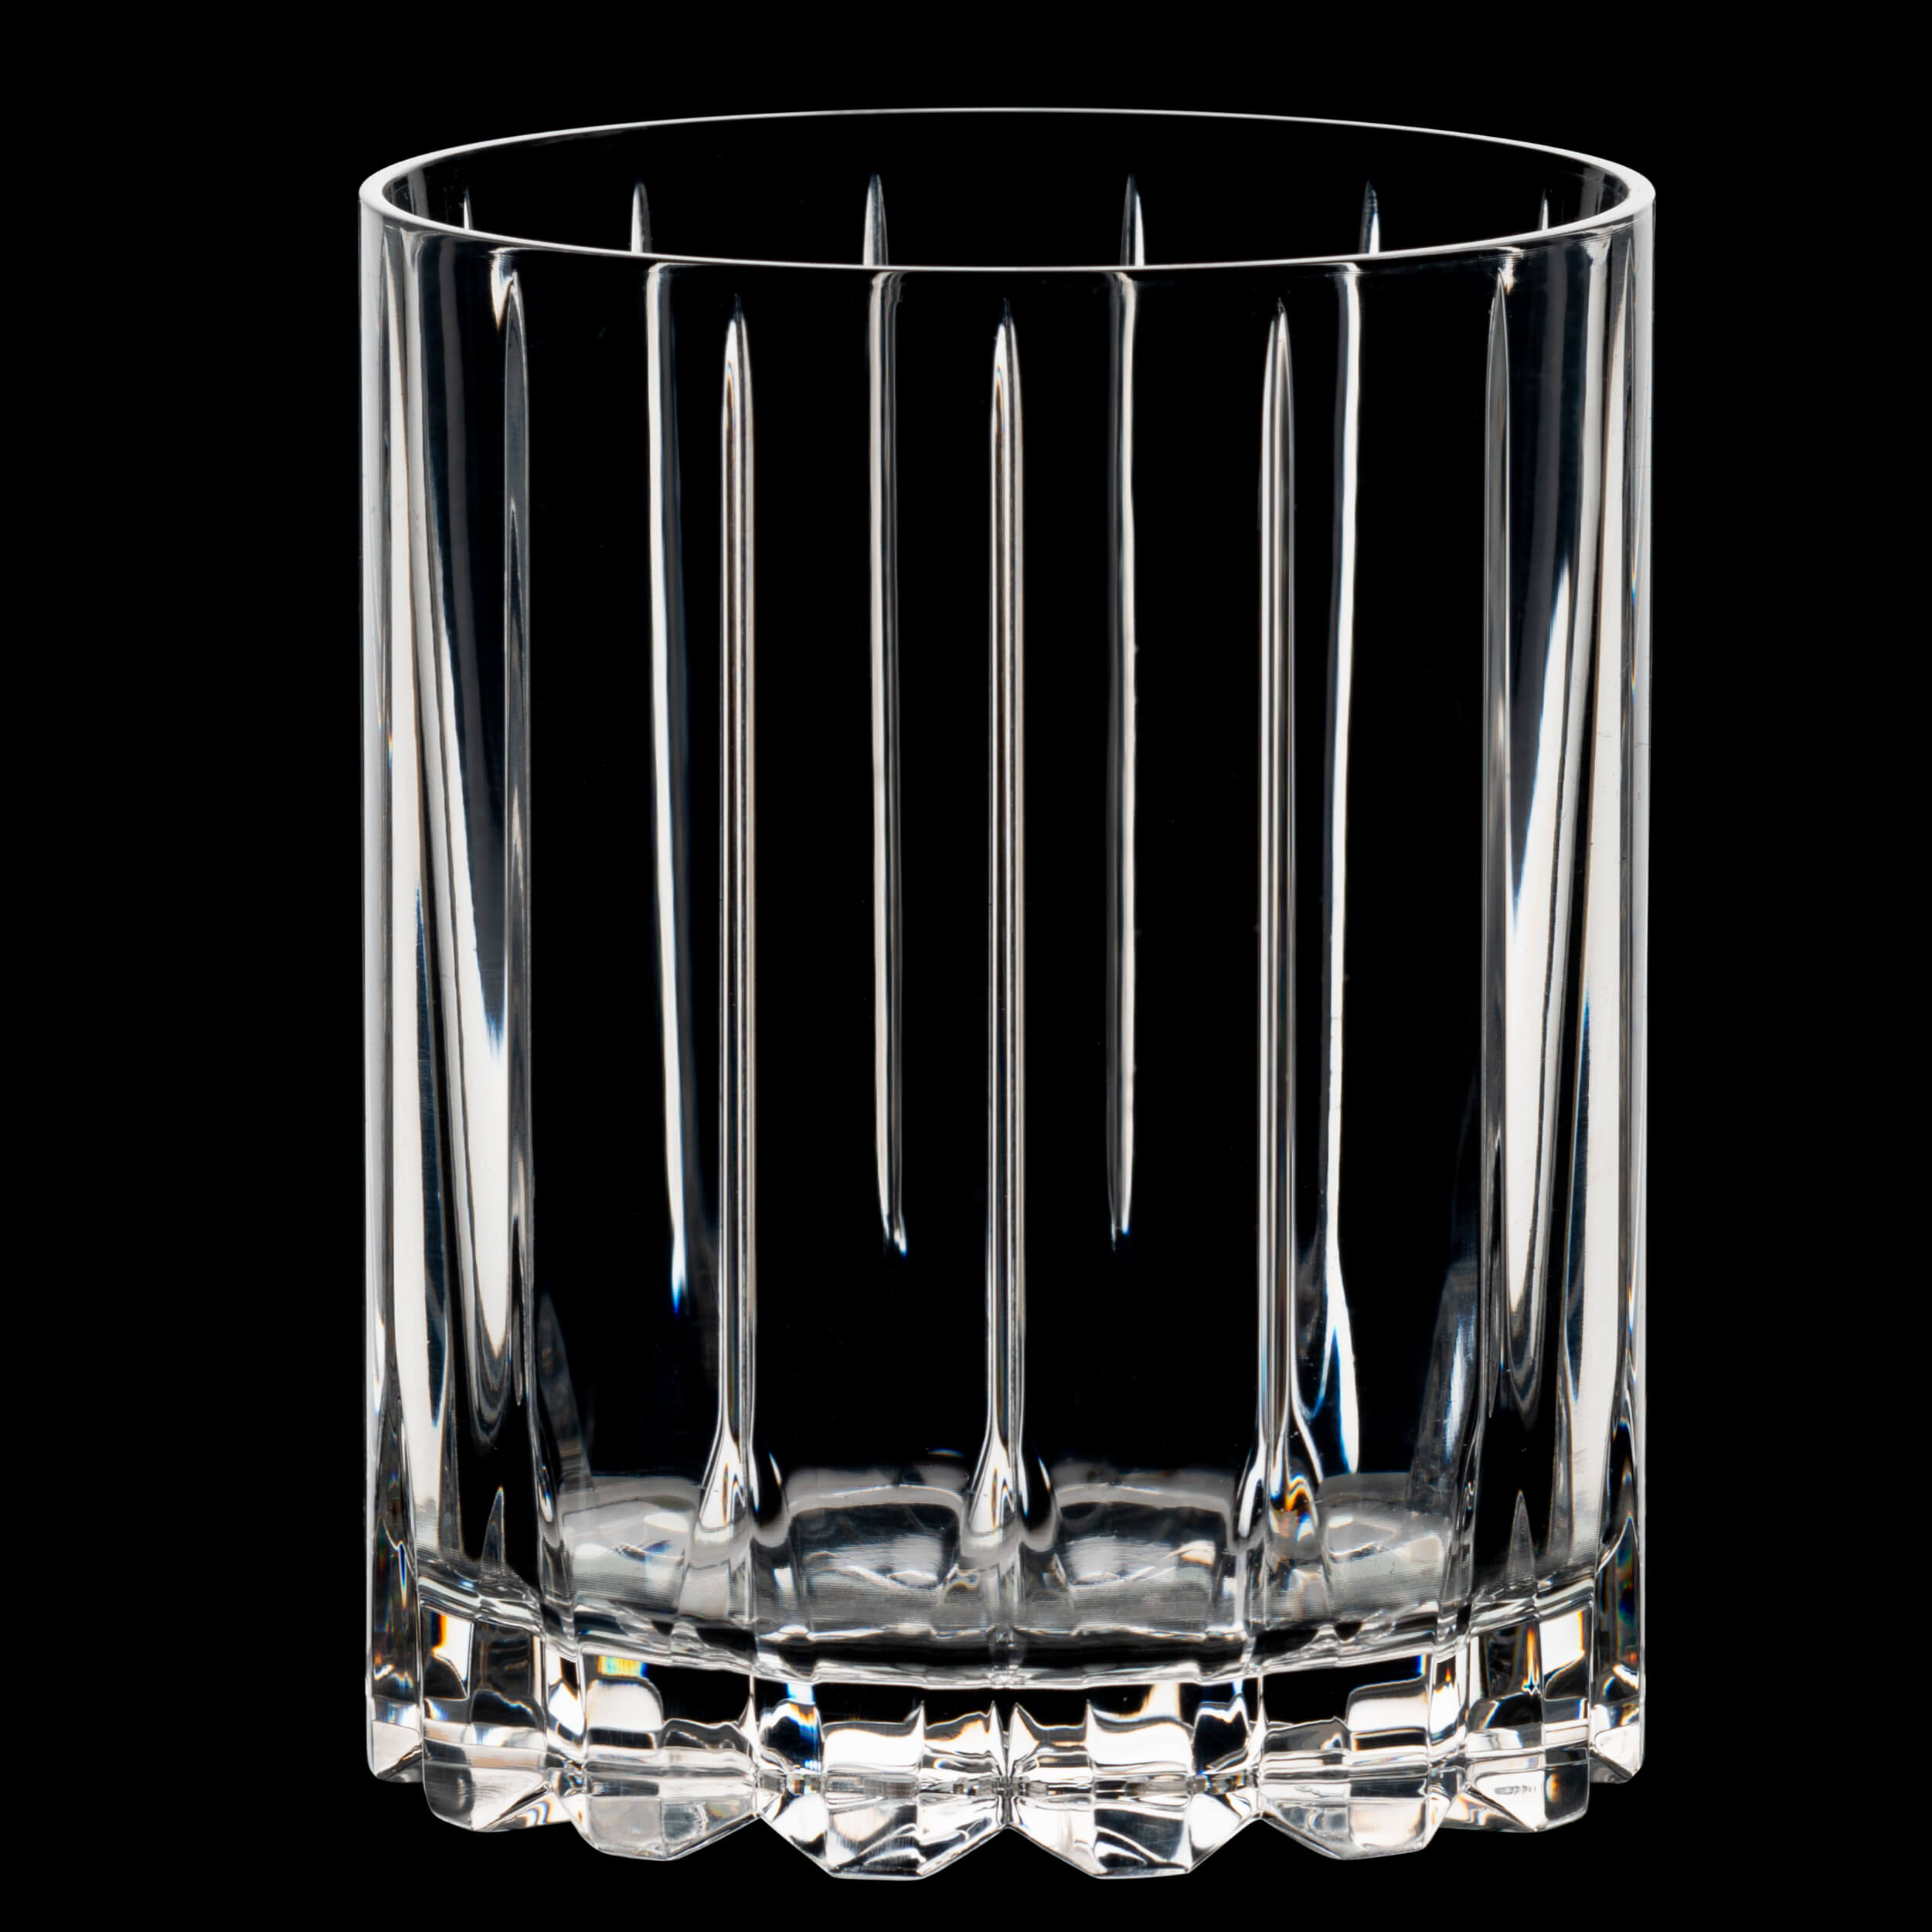 Double Rocks Glass Drink Specific Glassware, Riedel Bar - 370ml (2 pcs.)